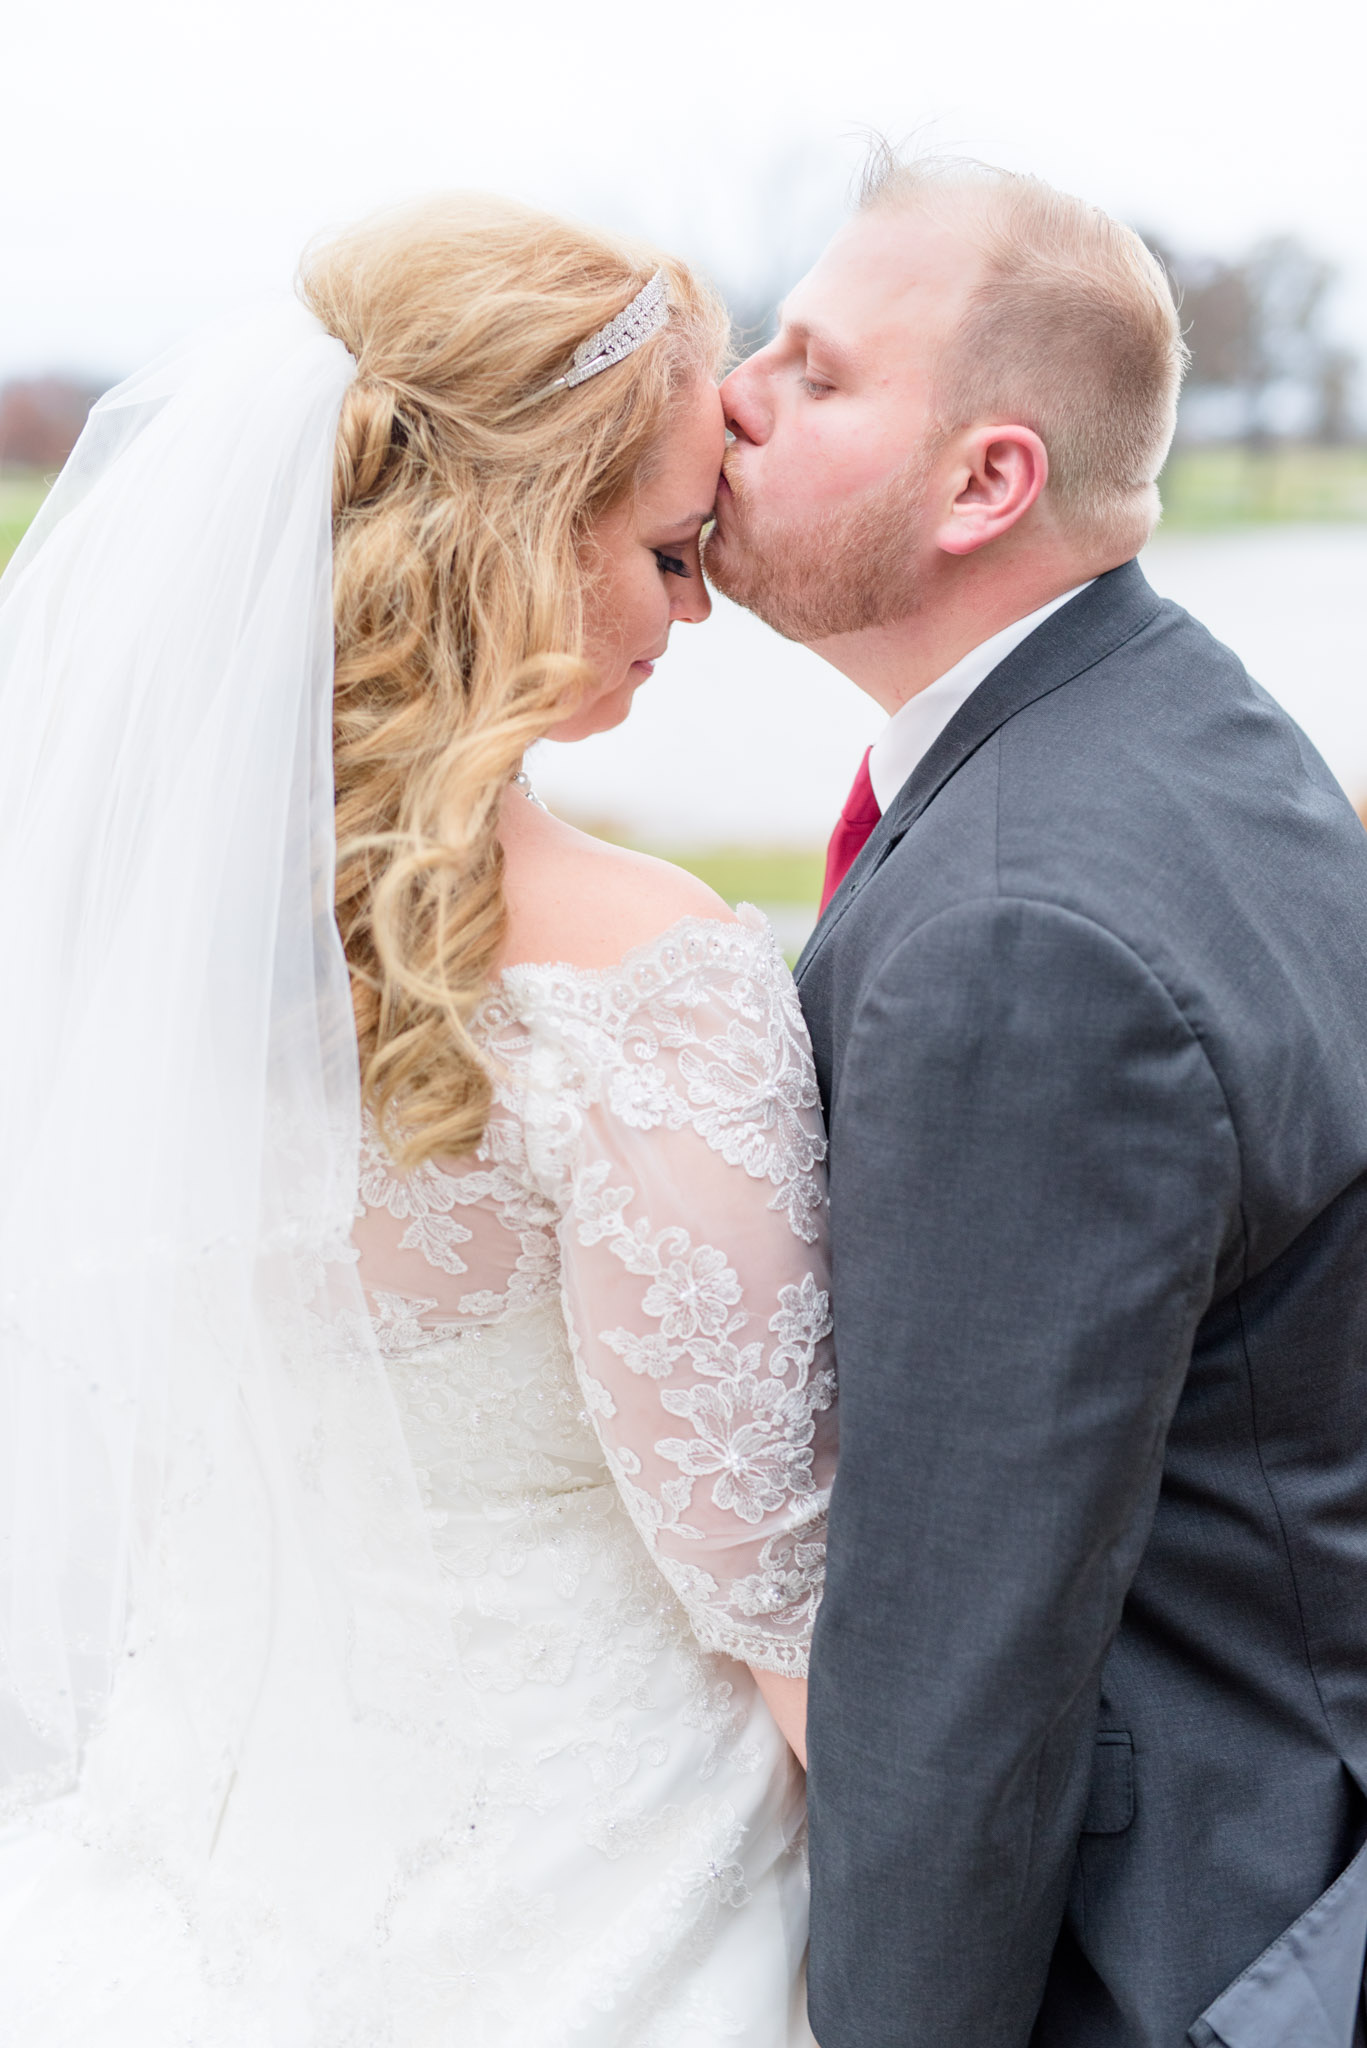 Groom kisses bride on forehead during wedding portraits.